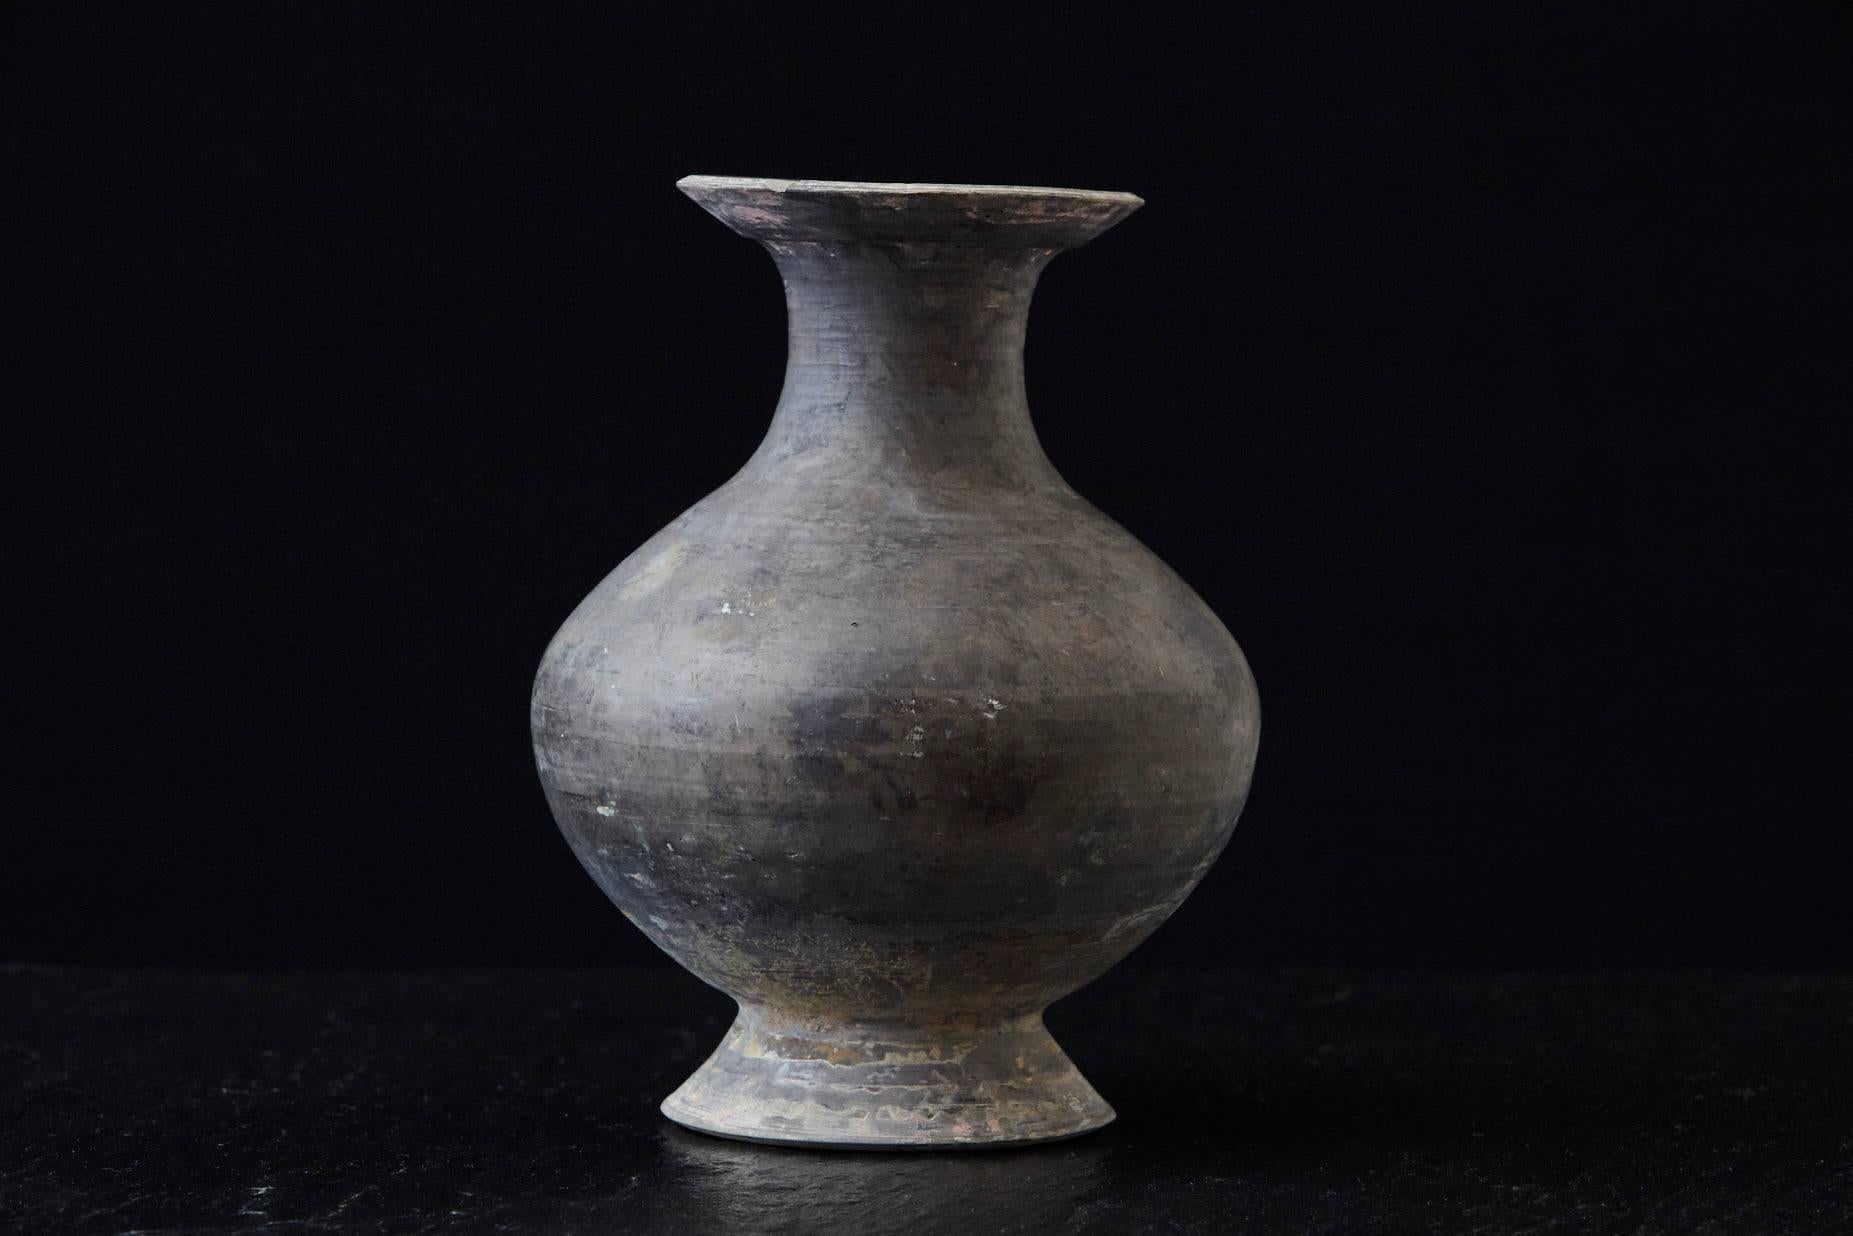 Rustic Antique Italian Terra Cotta Vase with Bottle Shape in Dark Grey